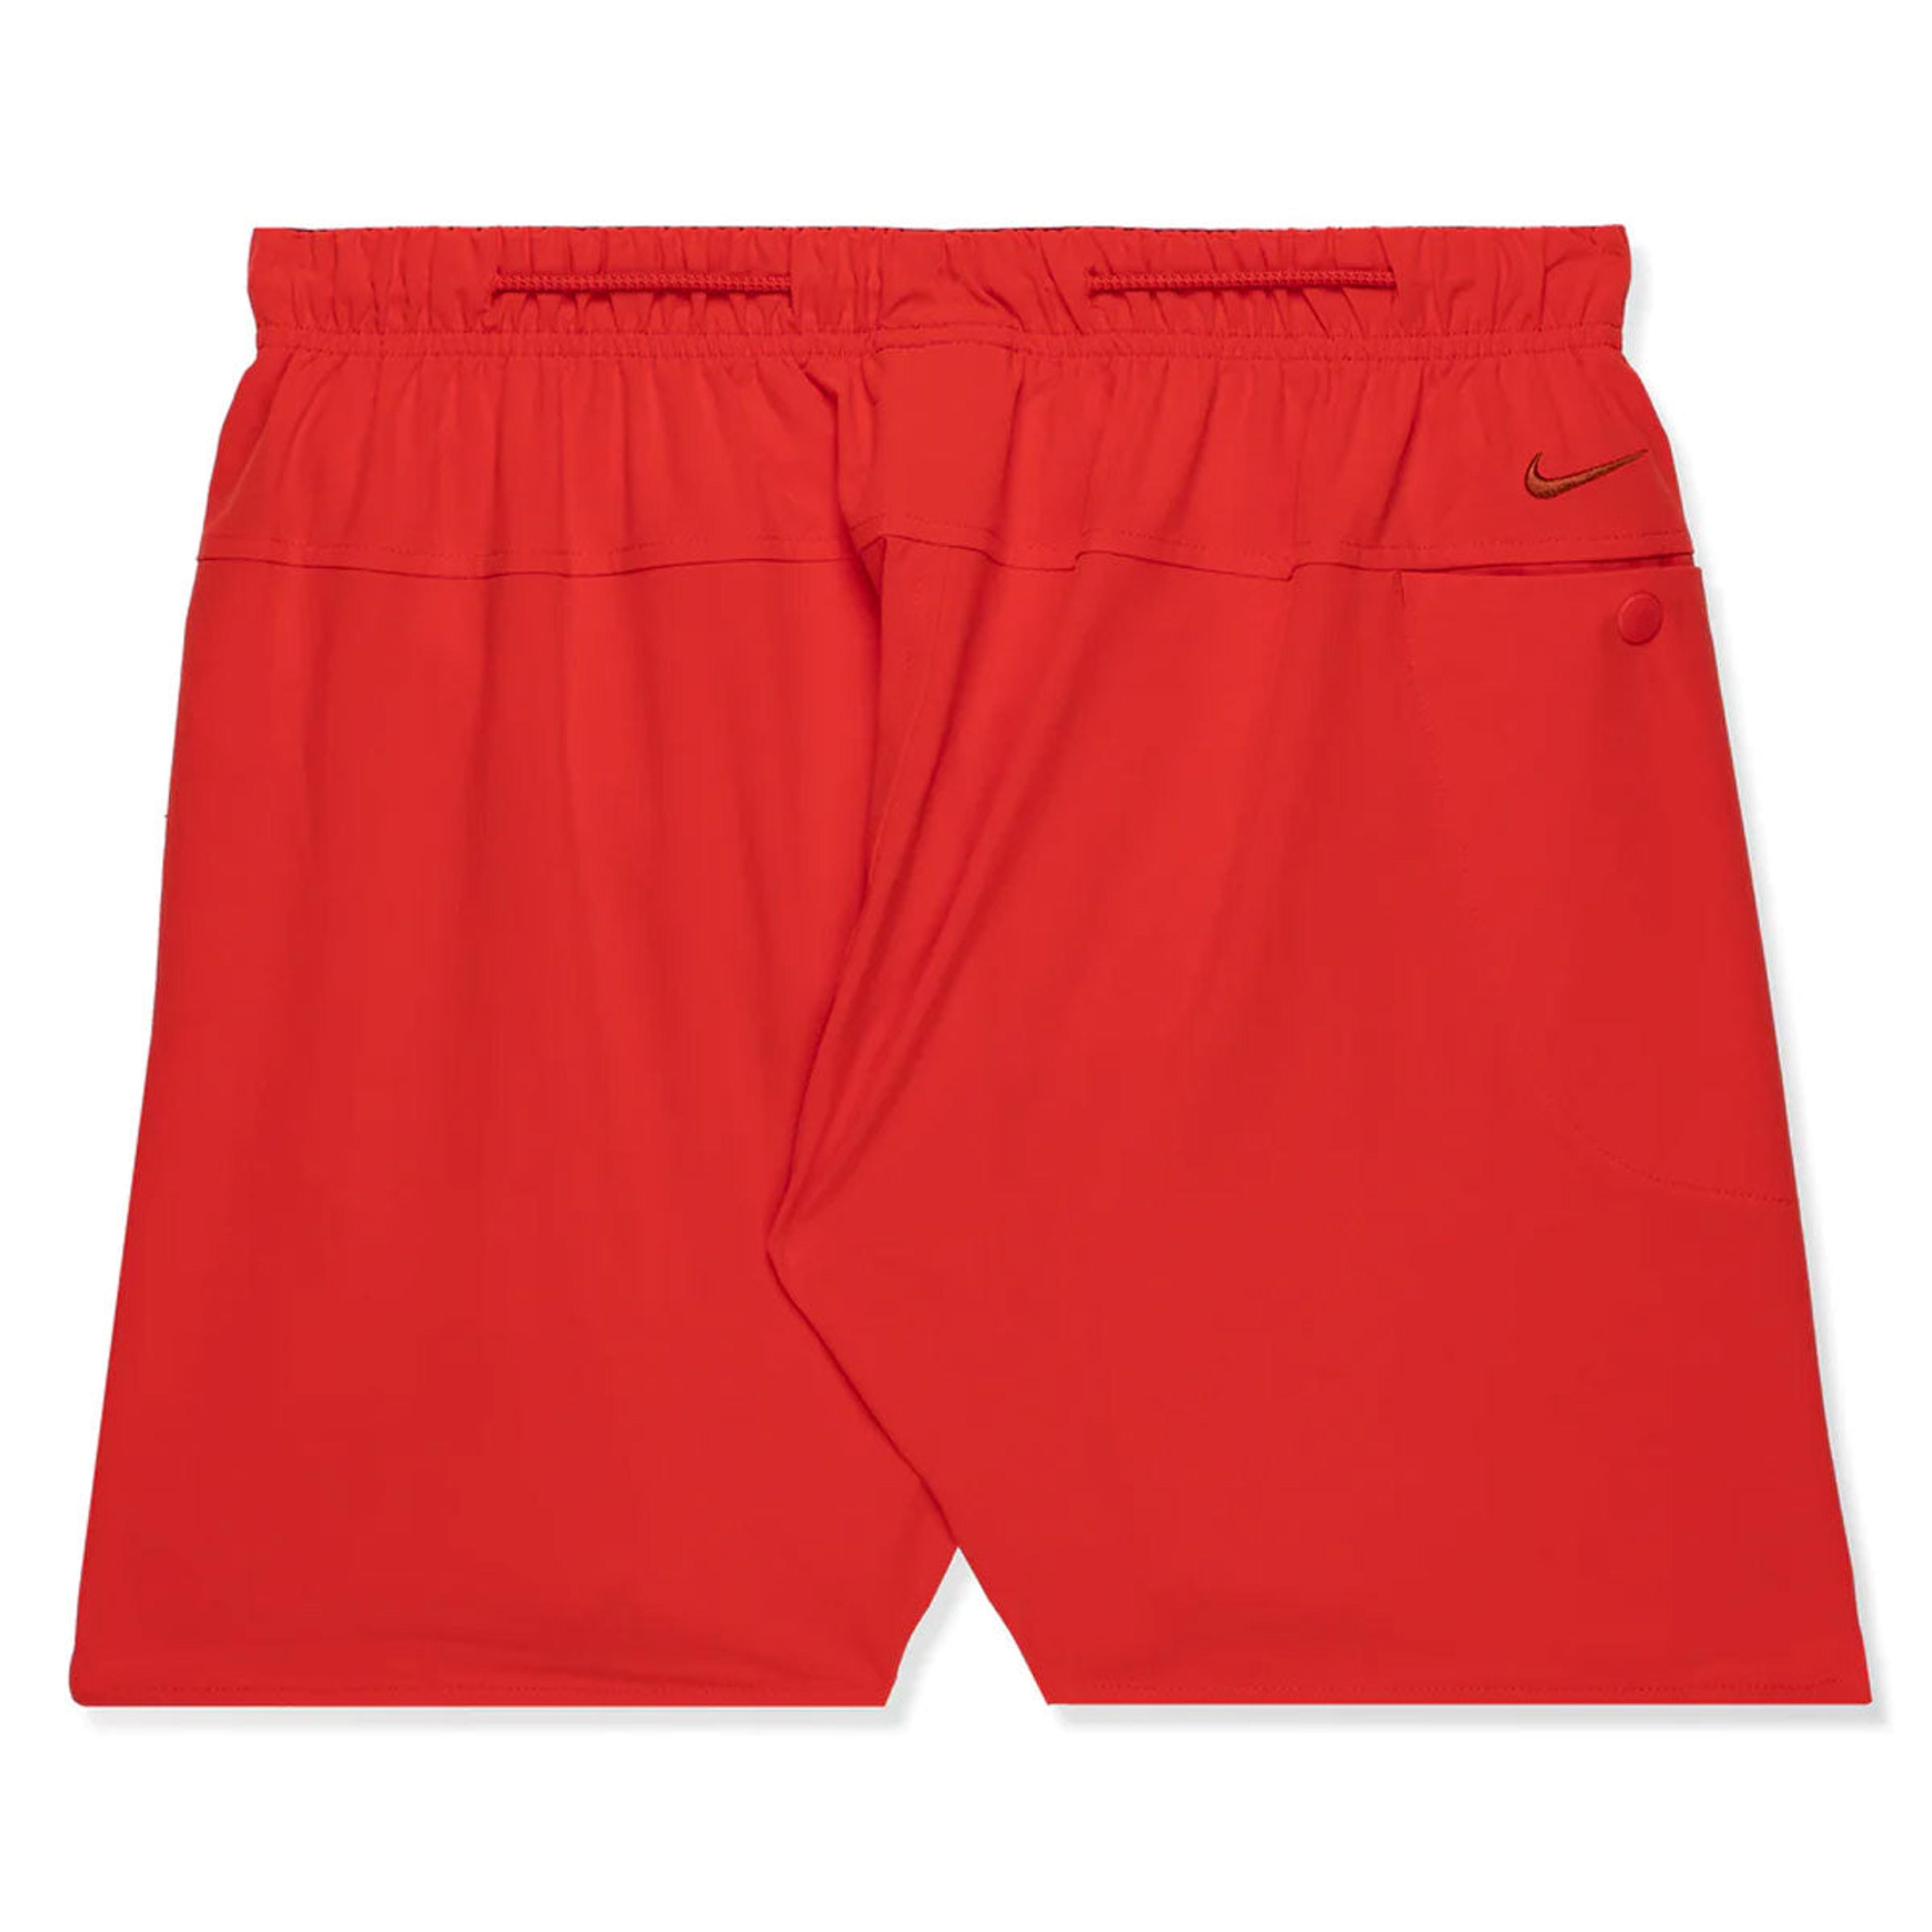 Alternate View 1 of Nike Men's ACG Dri-FIT "New Sands" Men's Shorts